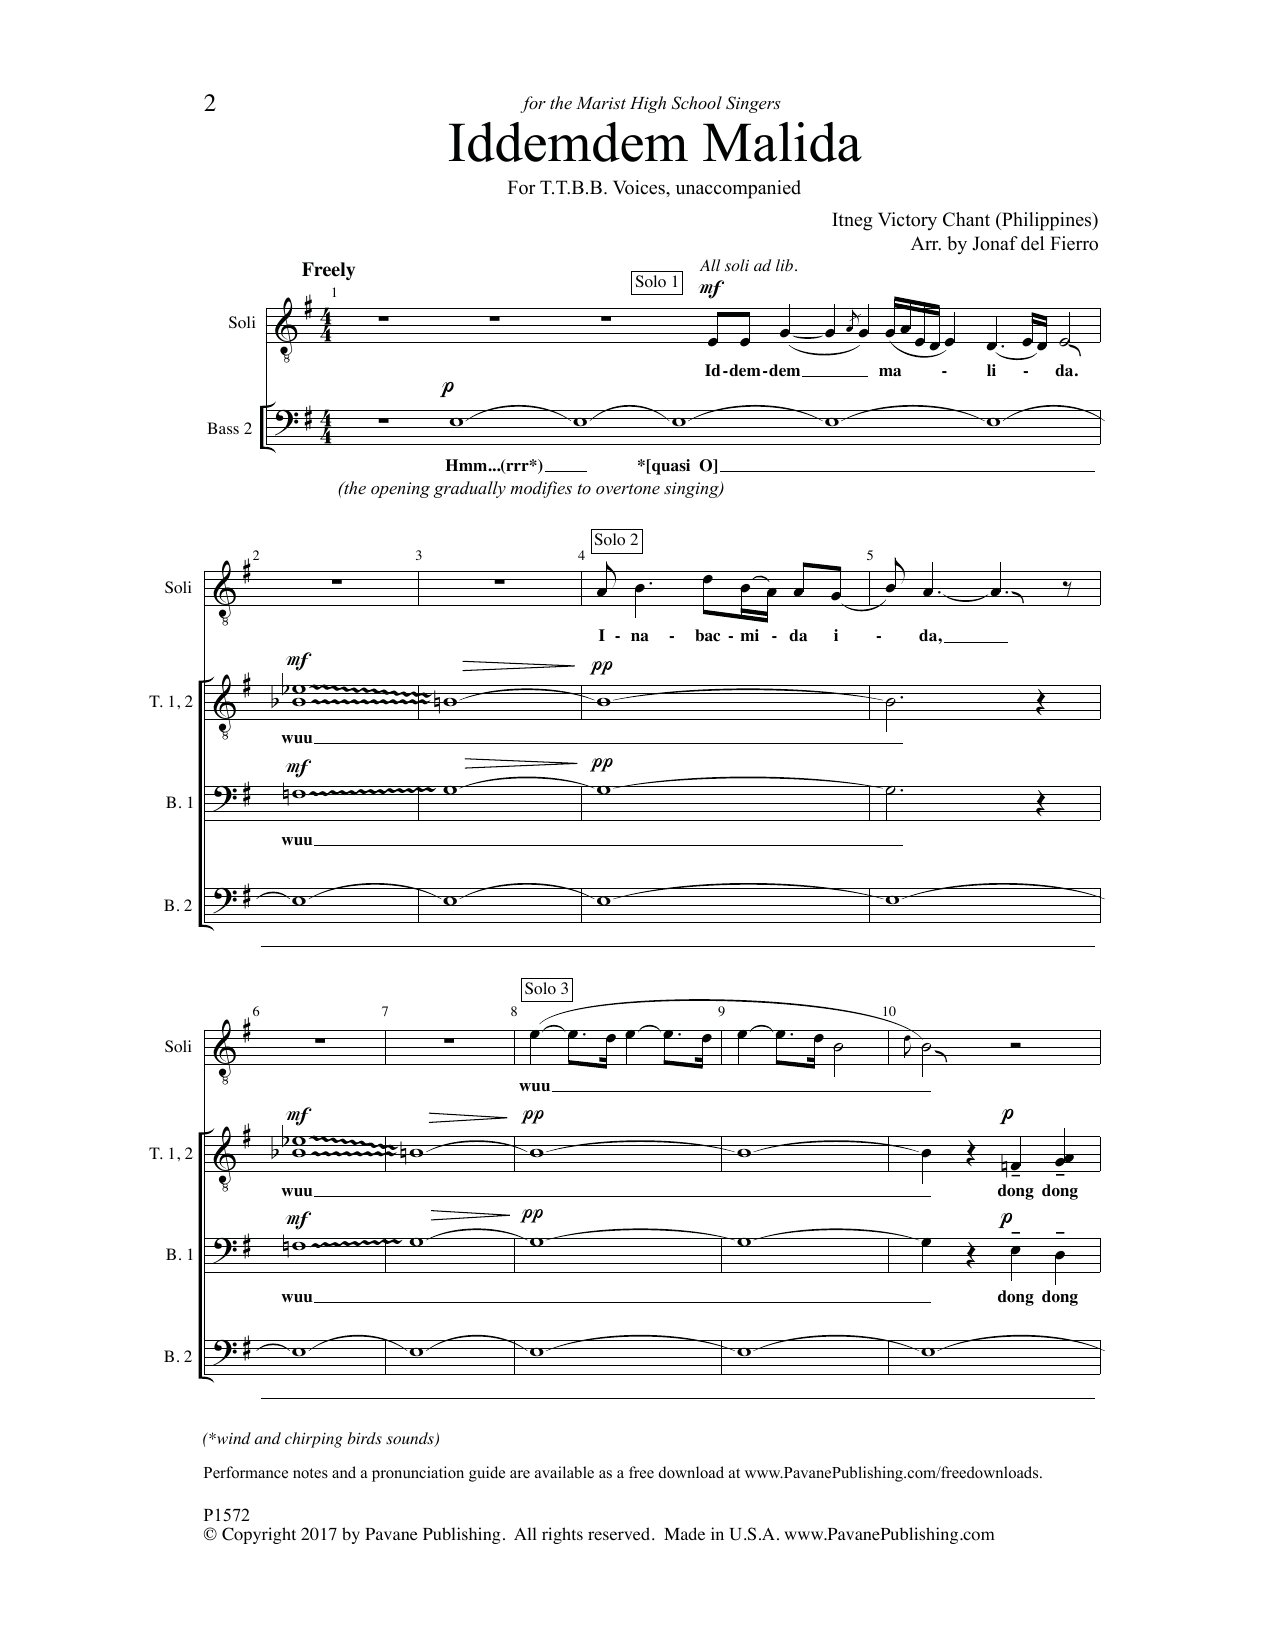 Jonaf del Fierro Iddemdem Malida sheet music notes and chords arranged for TTBB Choir